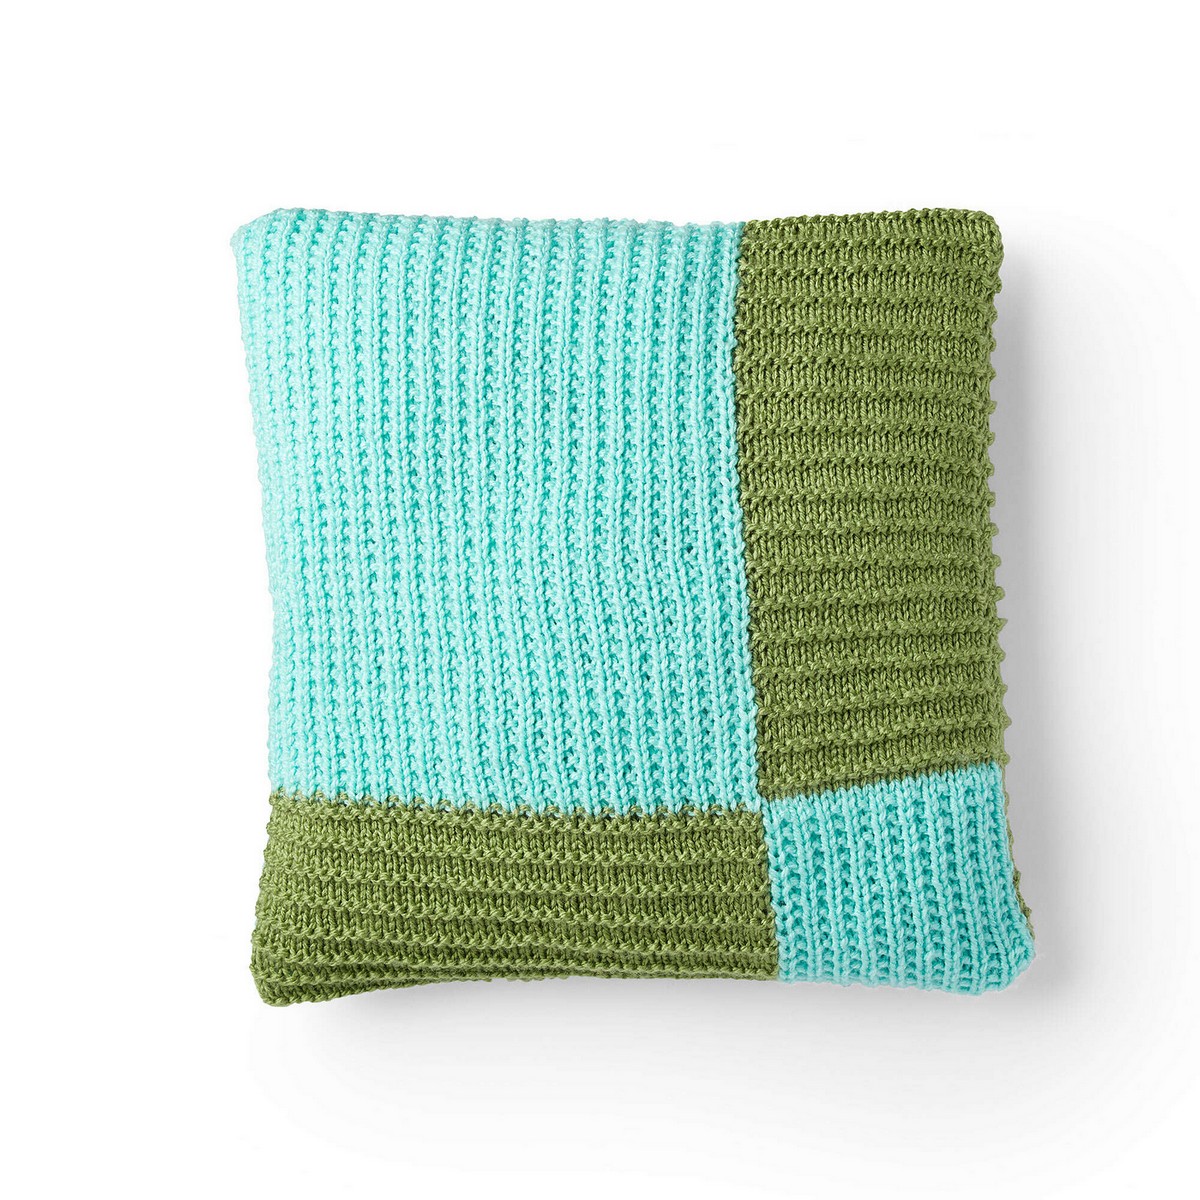 Knit Pillow Patterns